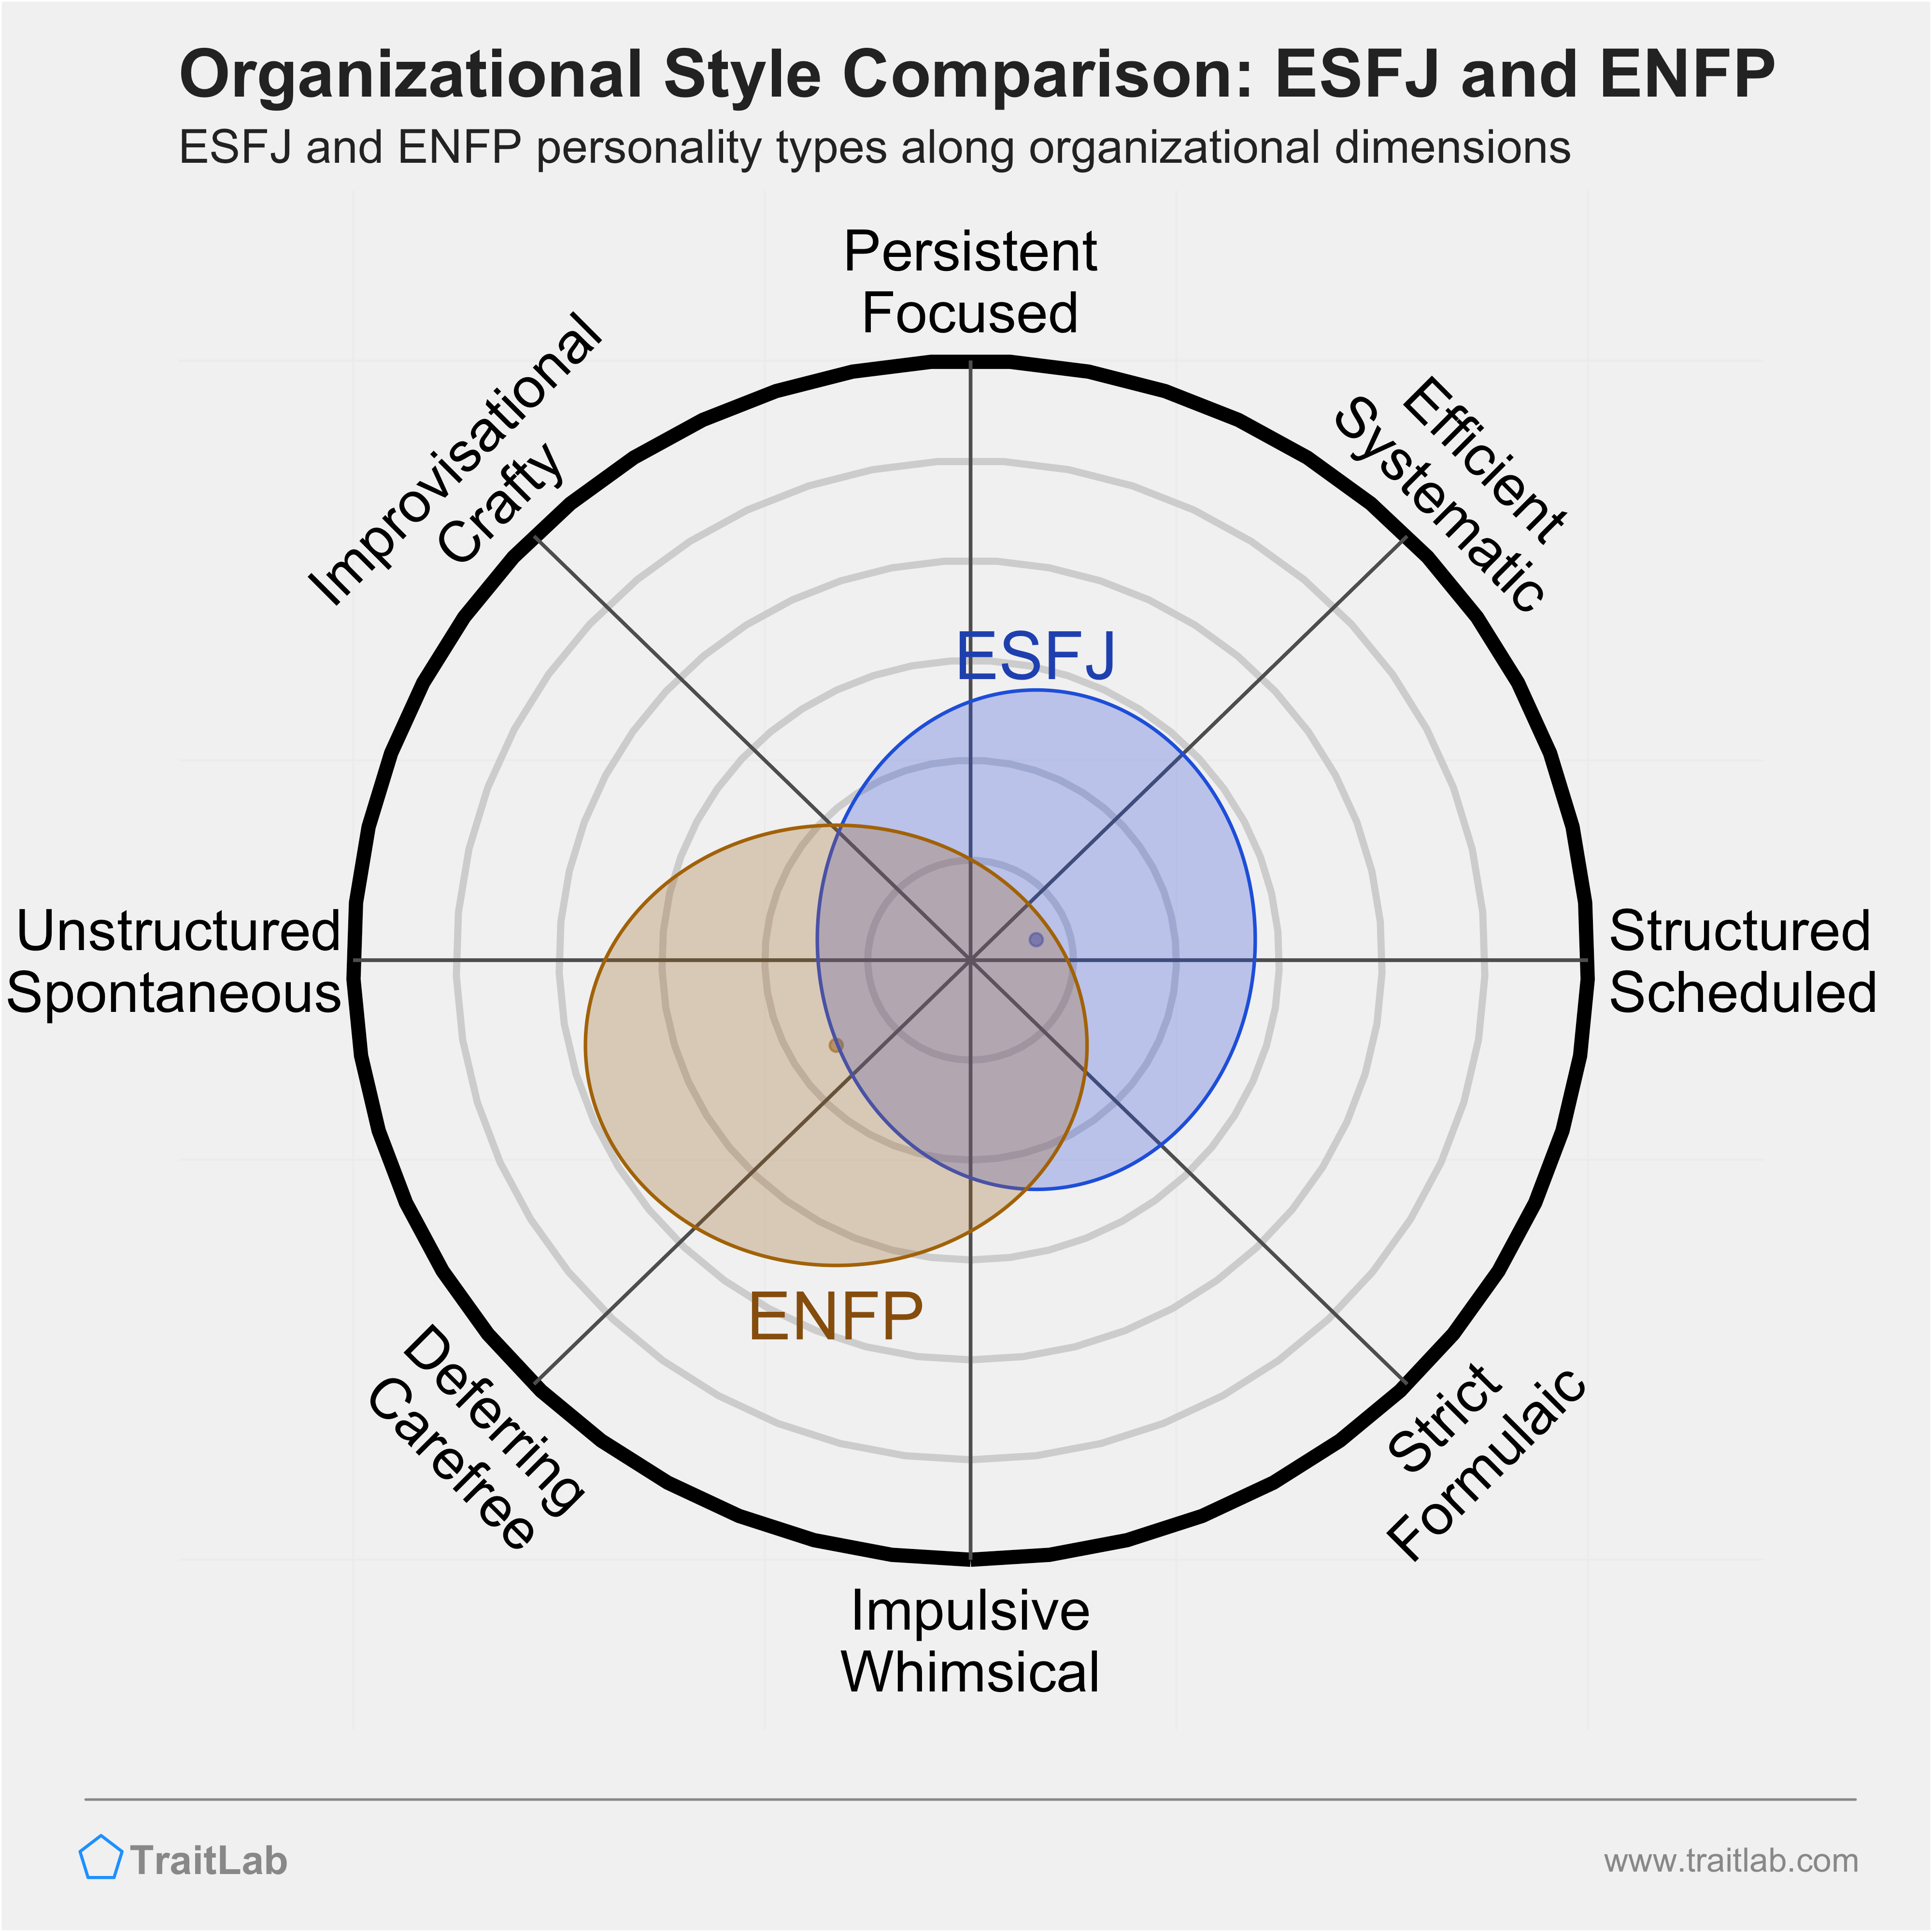 ESFJ and ENFP comparison across organizational dimensions